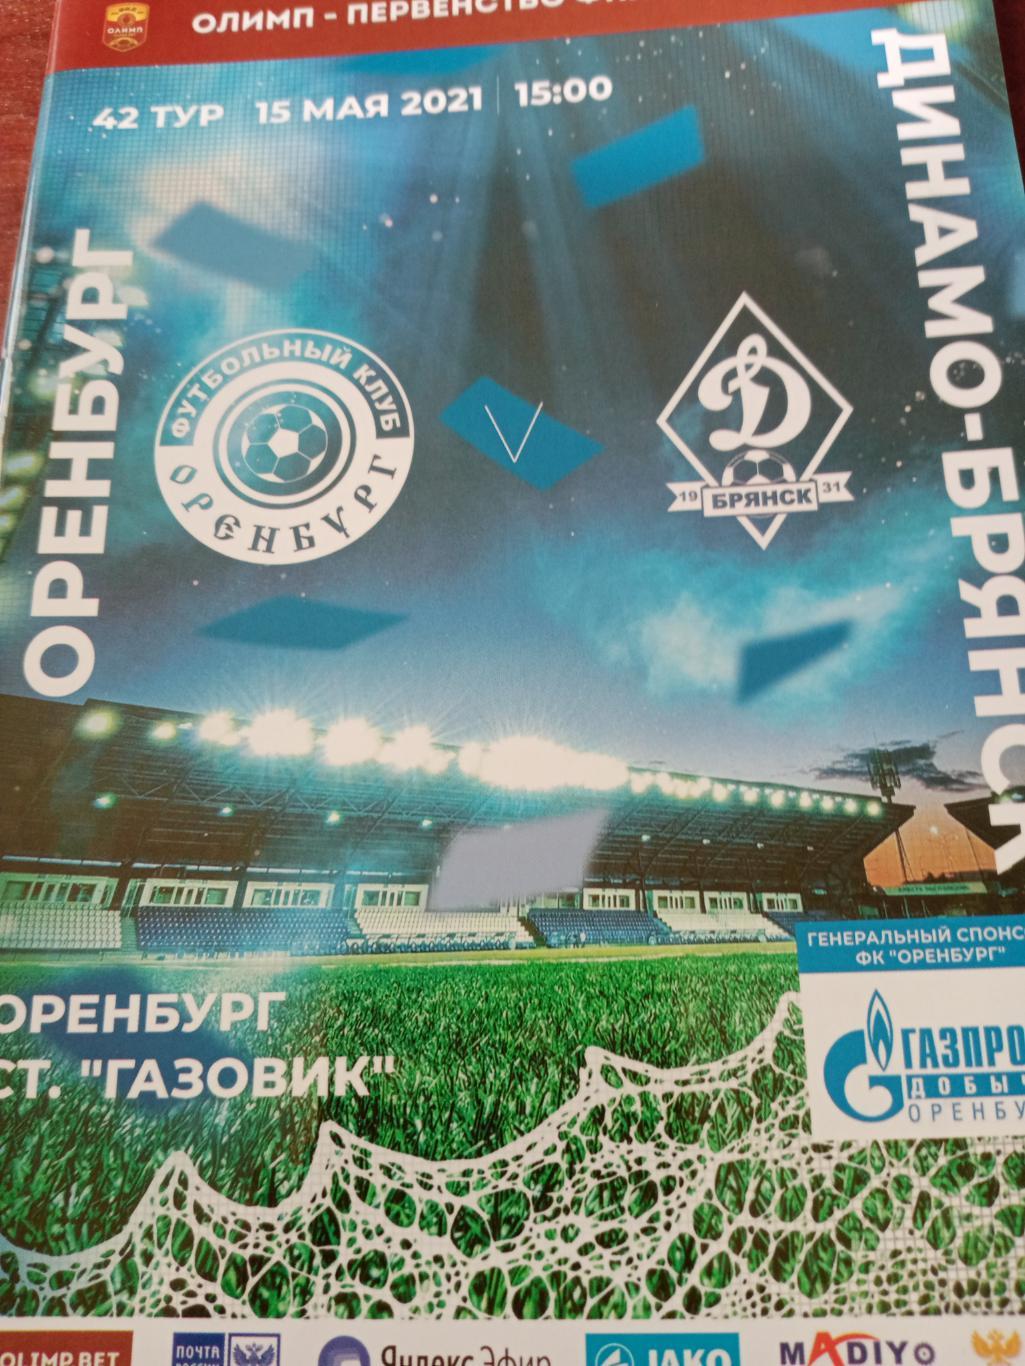 Оренбург - Динамо Брянск-15 мая 2021 г